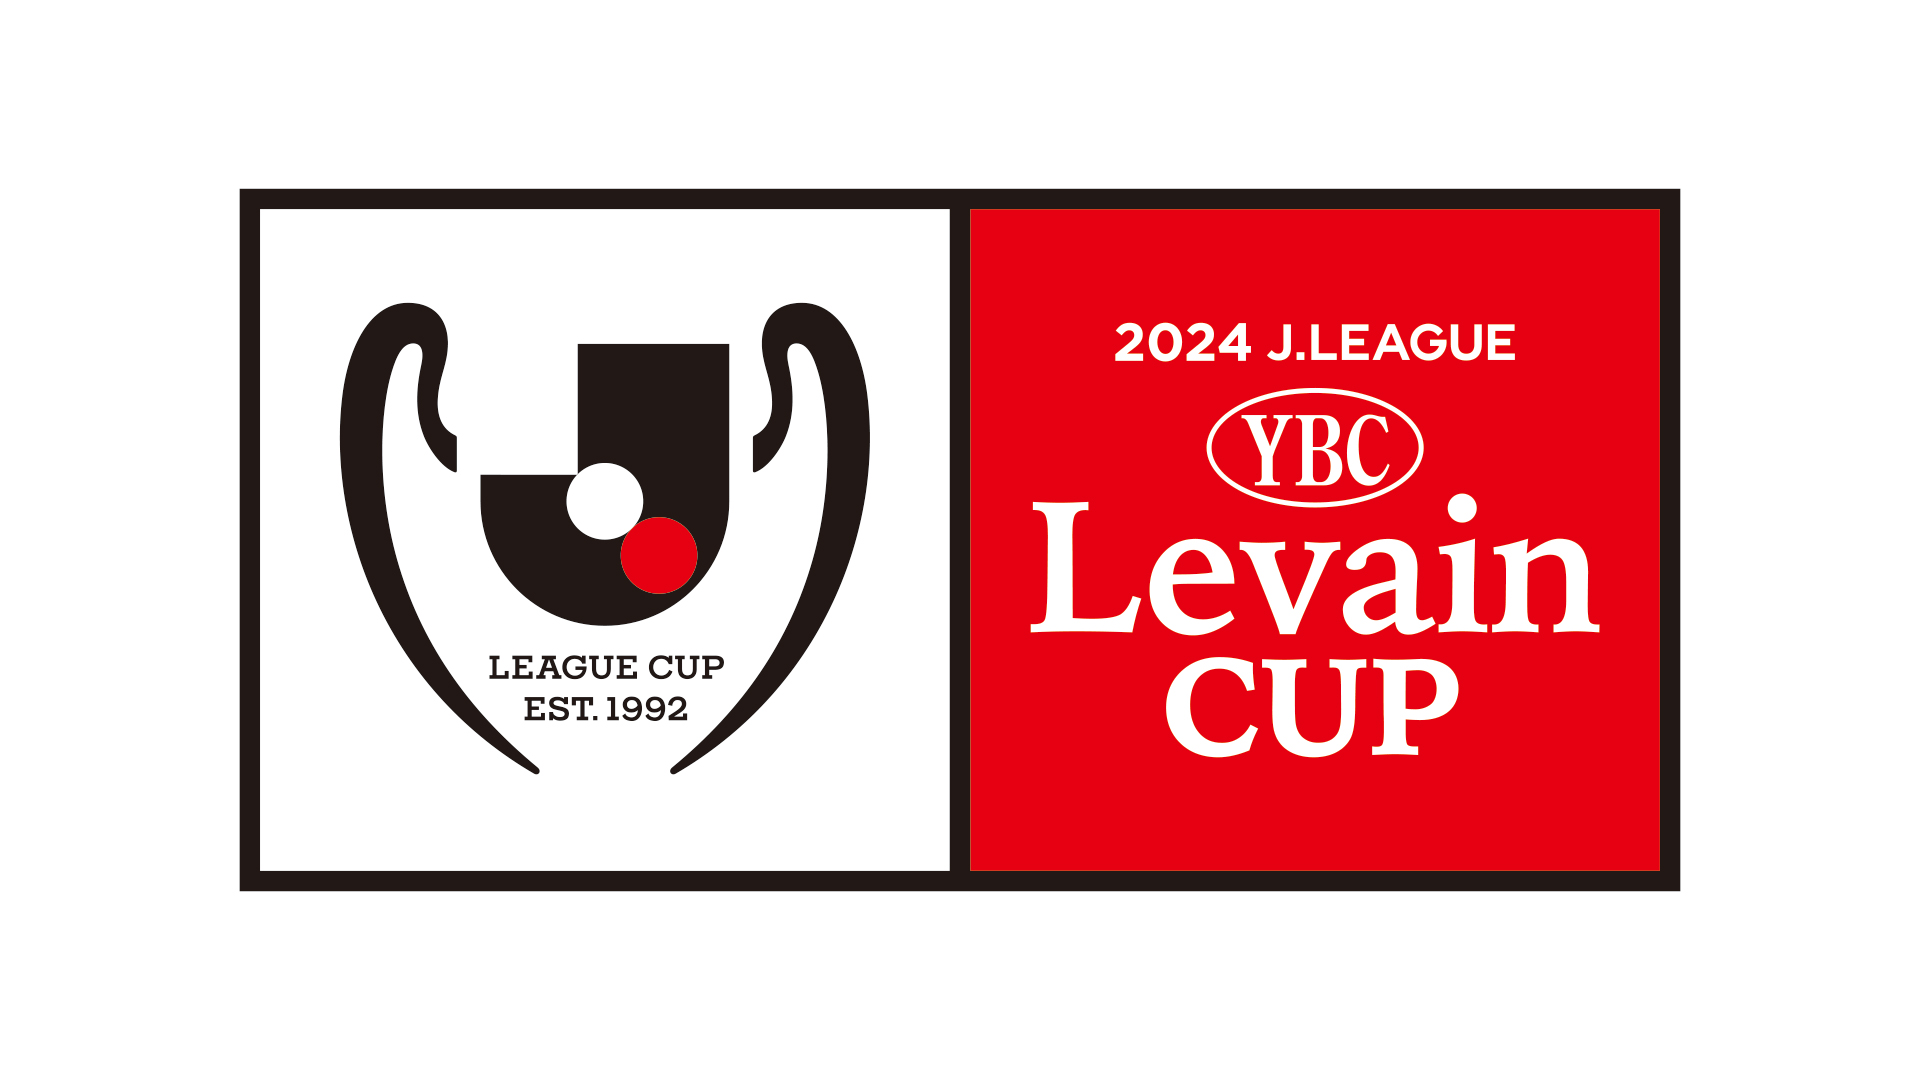 YBC Levain Cup รอบ 1 รอบ 3 เวลาคิกออฟและประกาศผลการตัดสินของสนาม